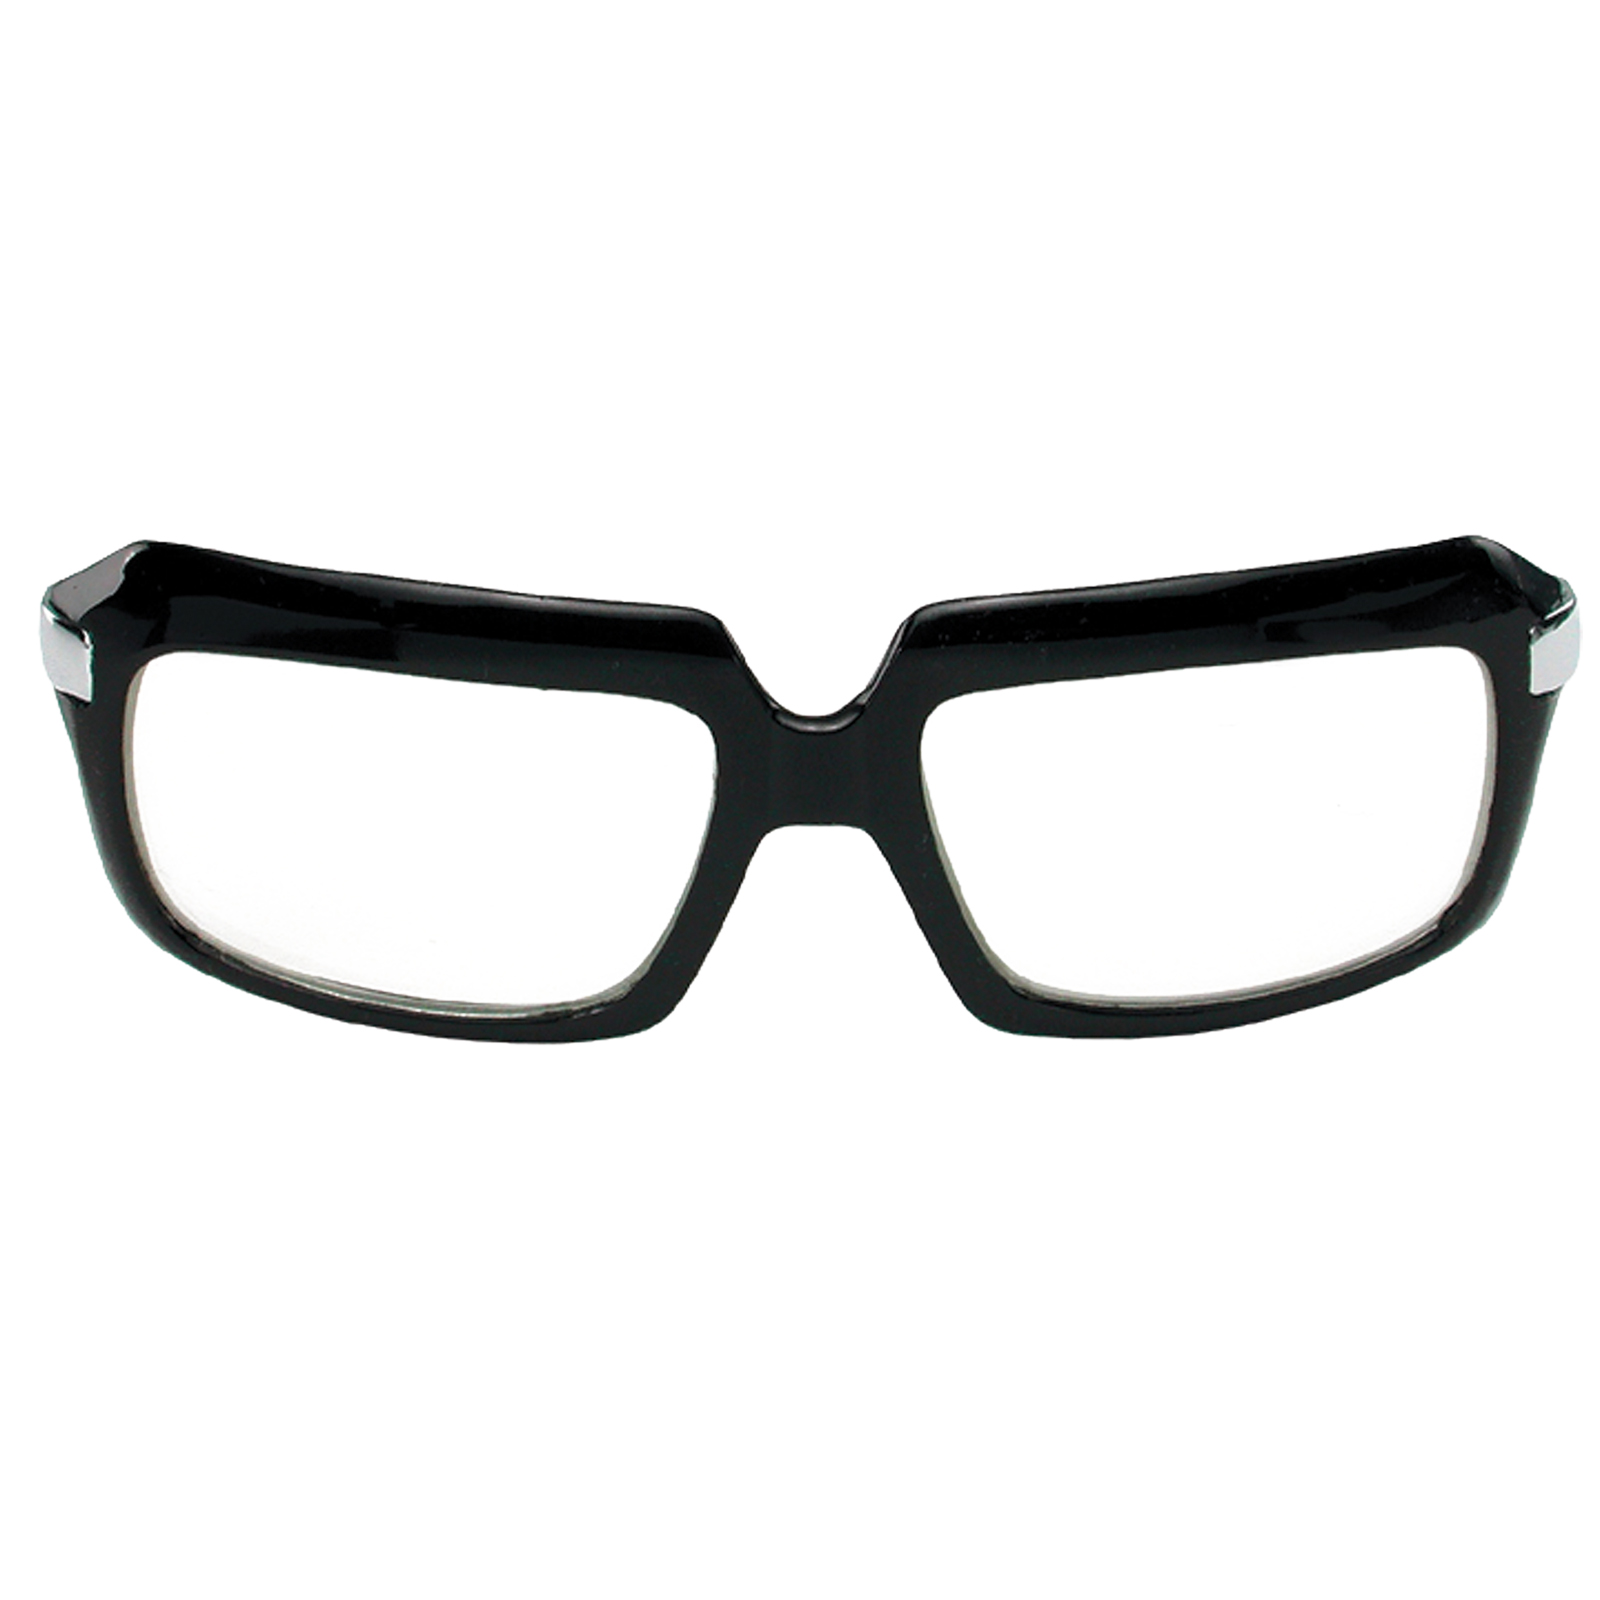 Glasses 80's Scratcher Black Costume Accessory